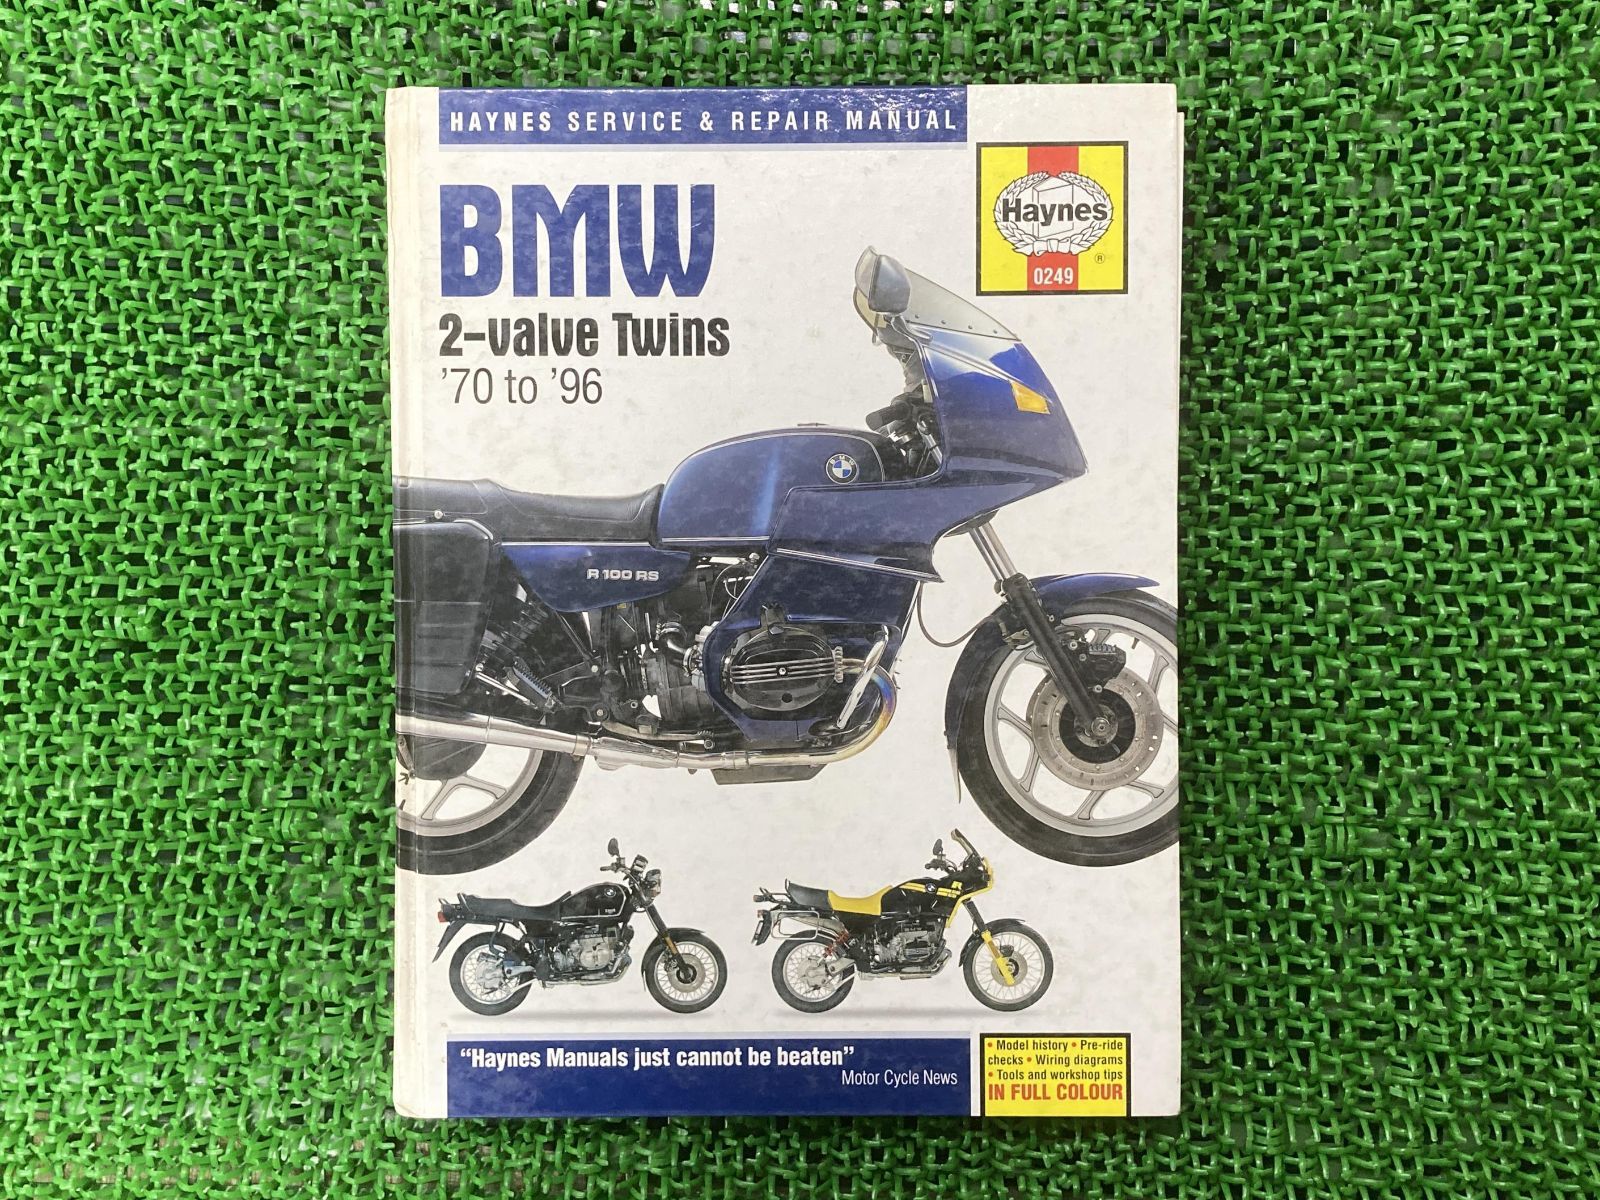 BMW1970-1996 取扱説明書 249-280-9Y10 Haynes 社外 中古 バイク 部品 配線図有り 2-ValveTwins  OHVボクサー